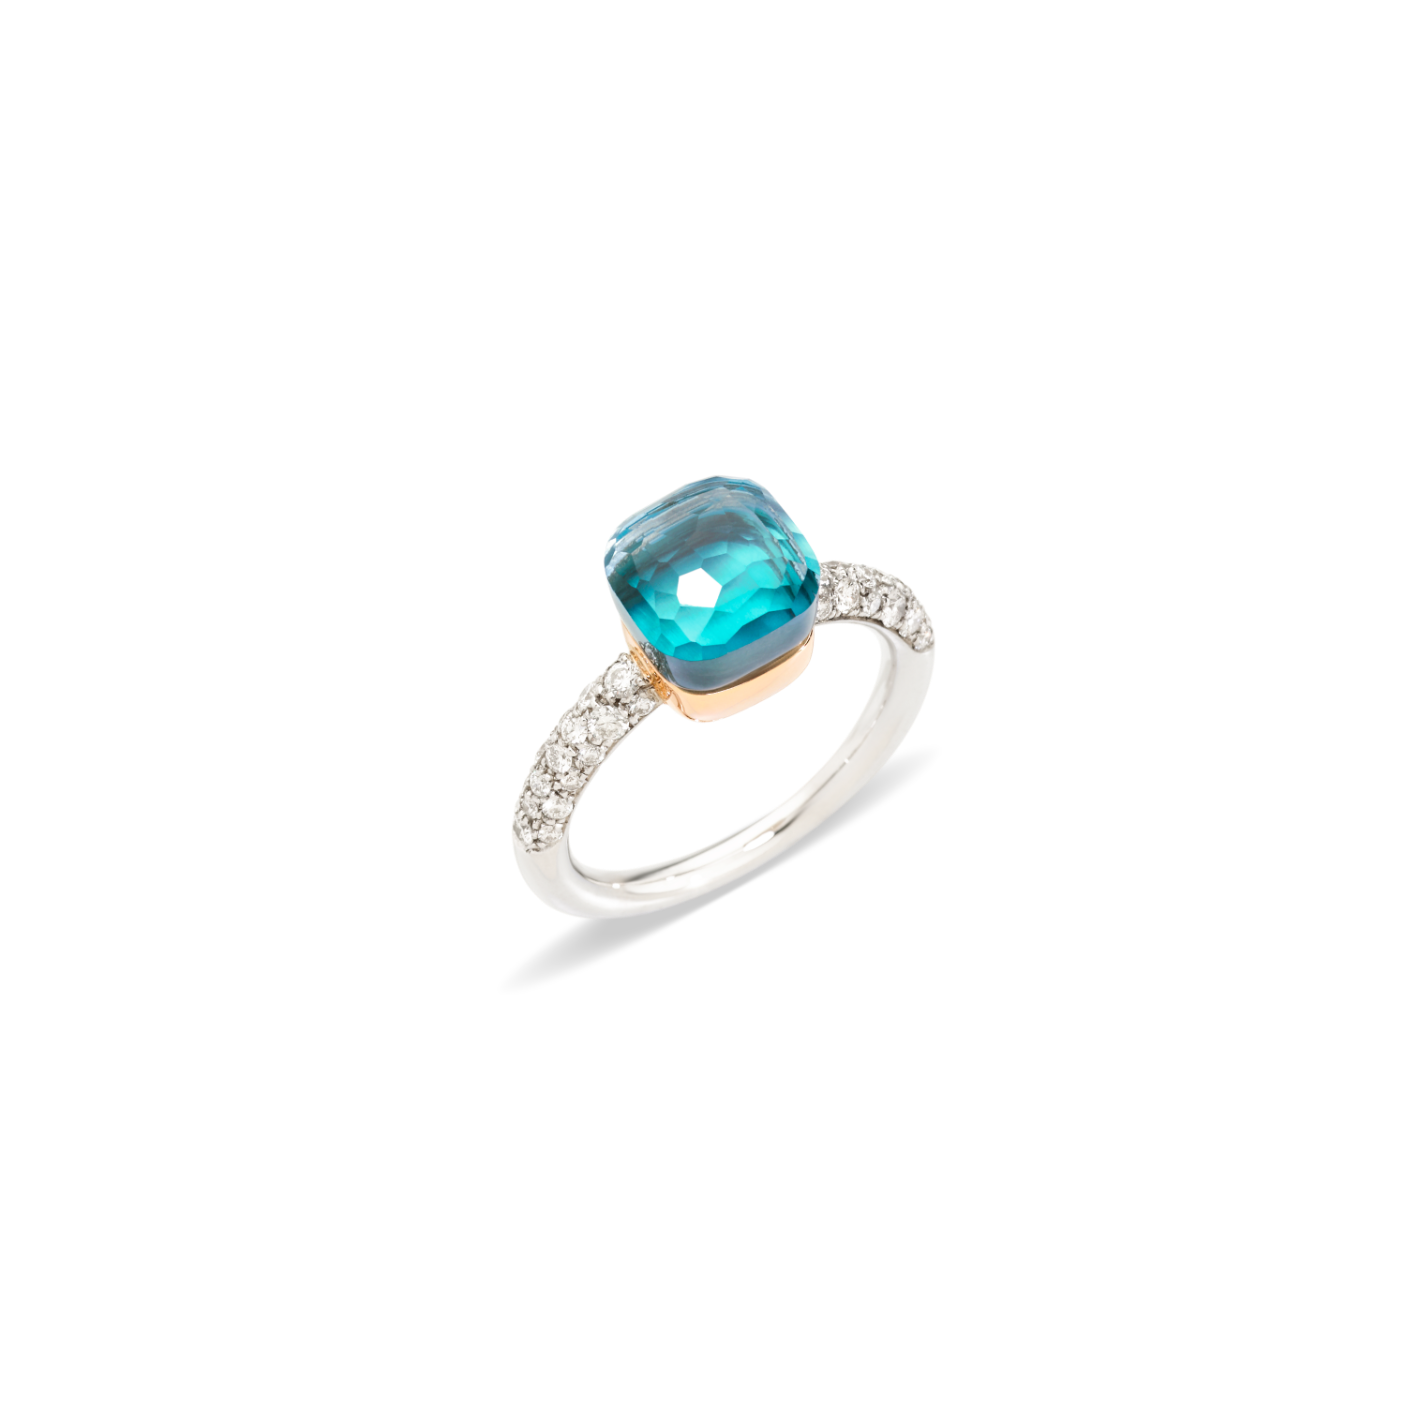 PAB7040_O6WHR_DB0OY_010_Pomellato_nudo-petit-ring-white-gold-18kt-rose-gold-18kt-blue-topaz-agate-diamond.png